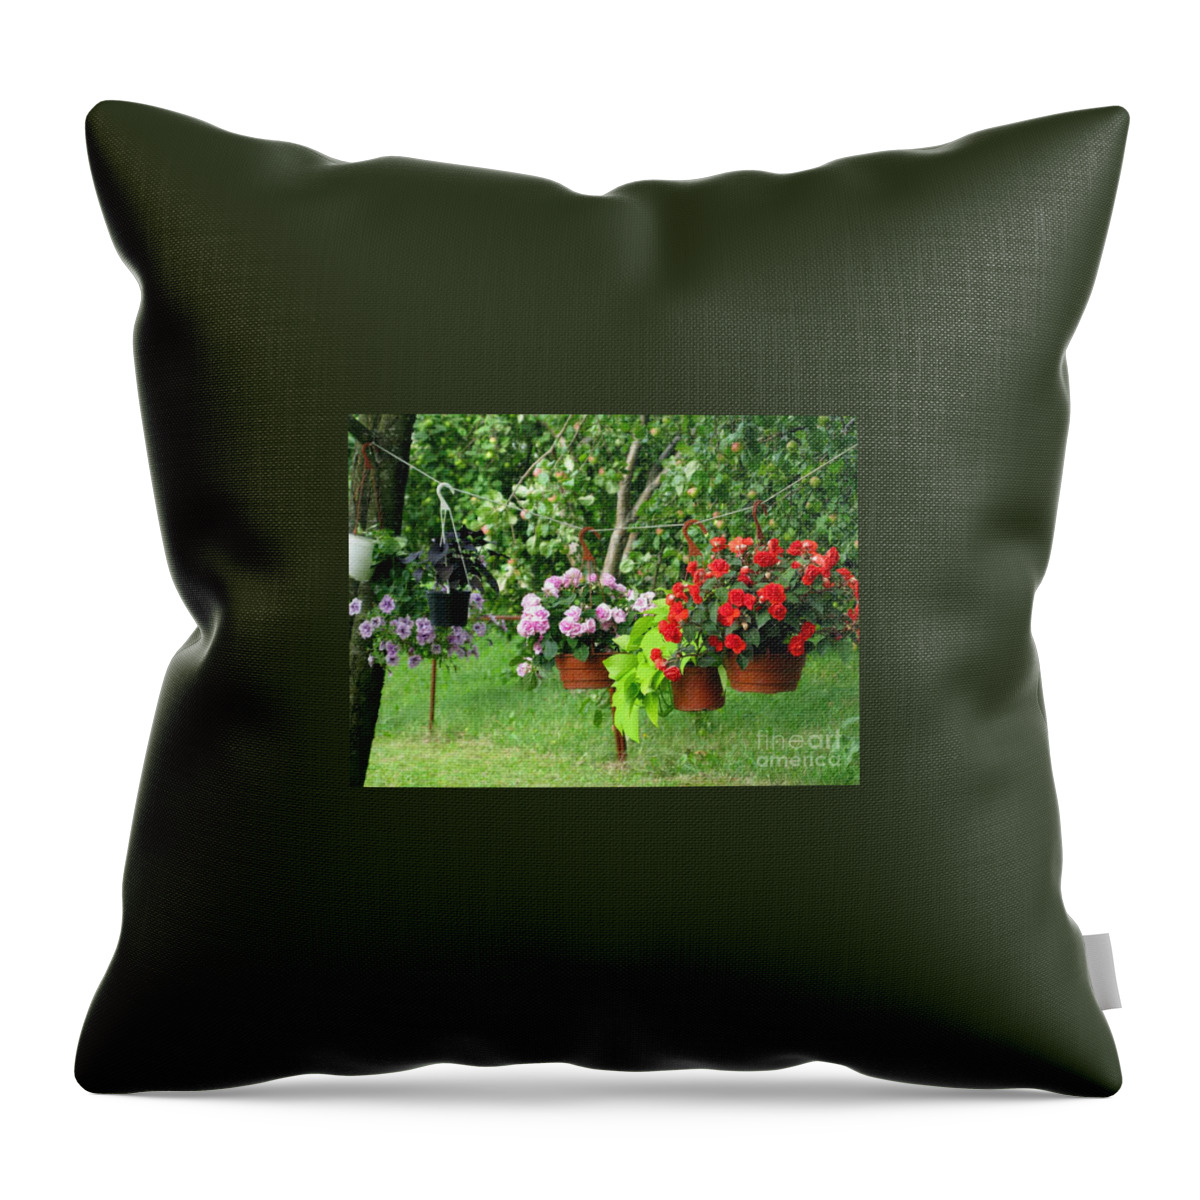 Flower Throw Pillow featuring the photograph Begonias On Line by Ausra Huntington nee Paulauskaite